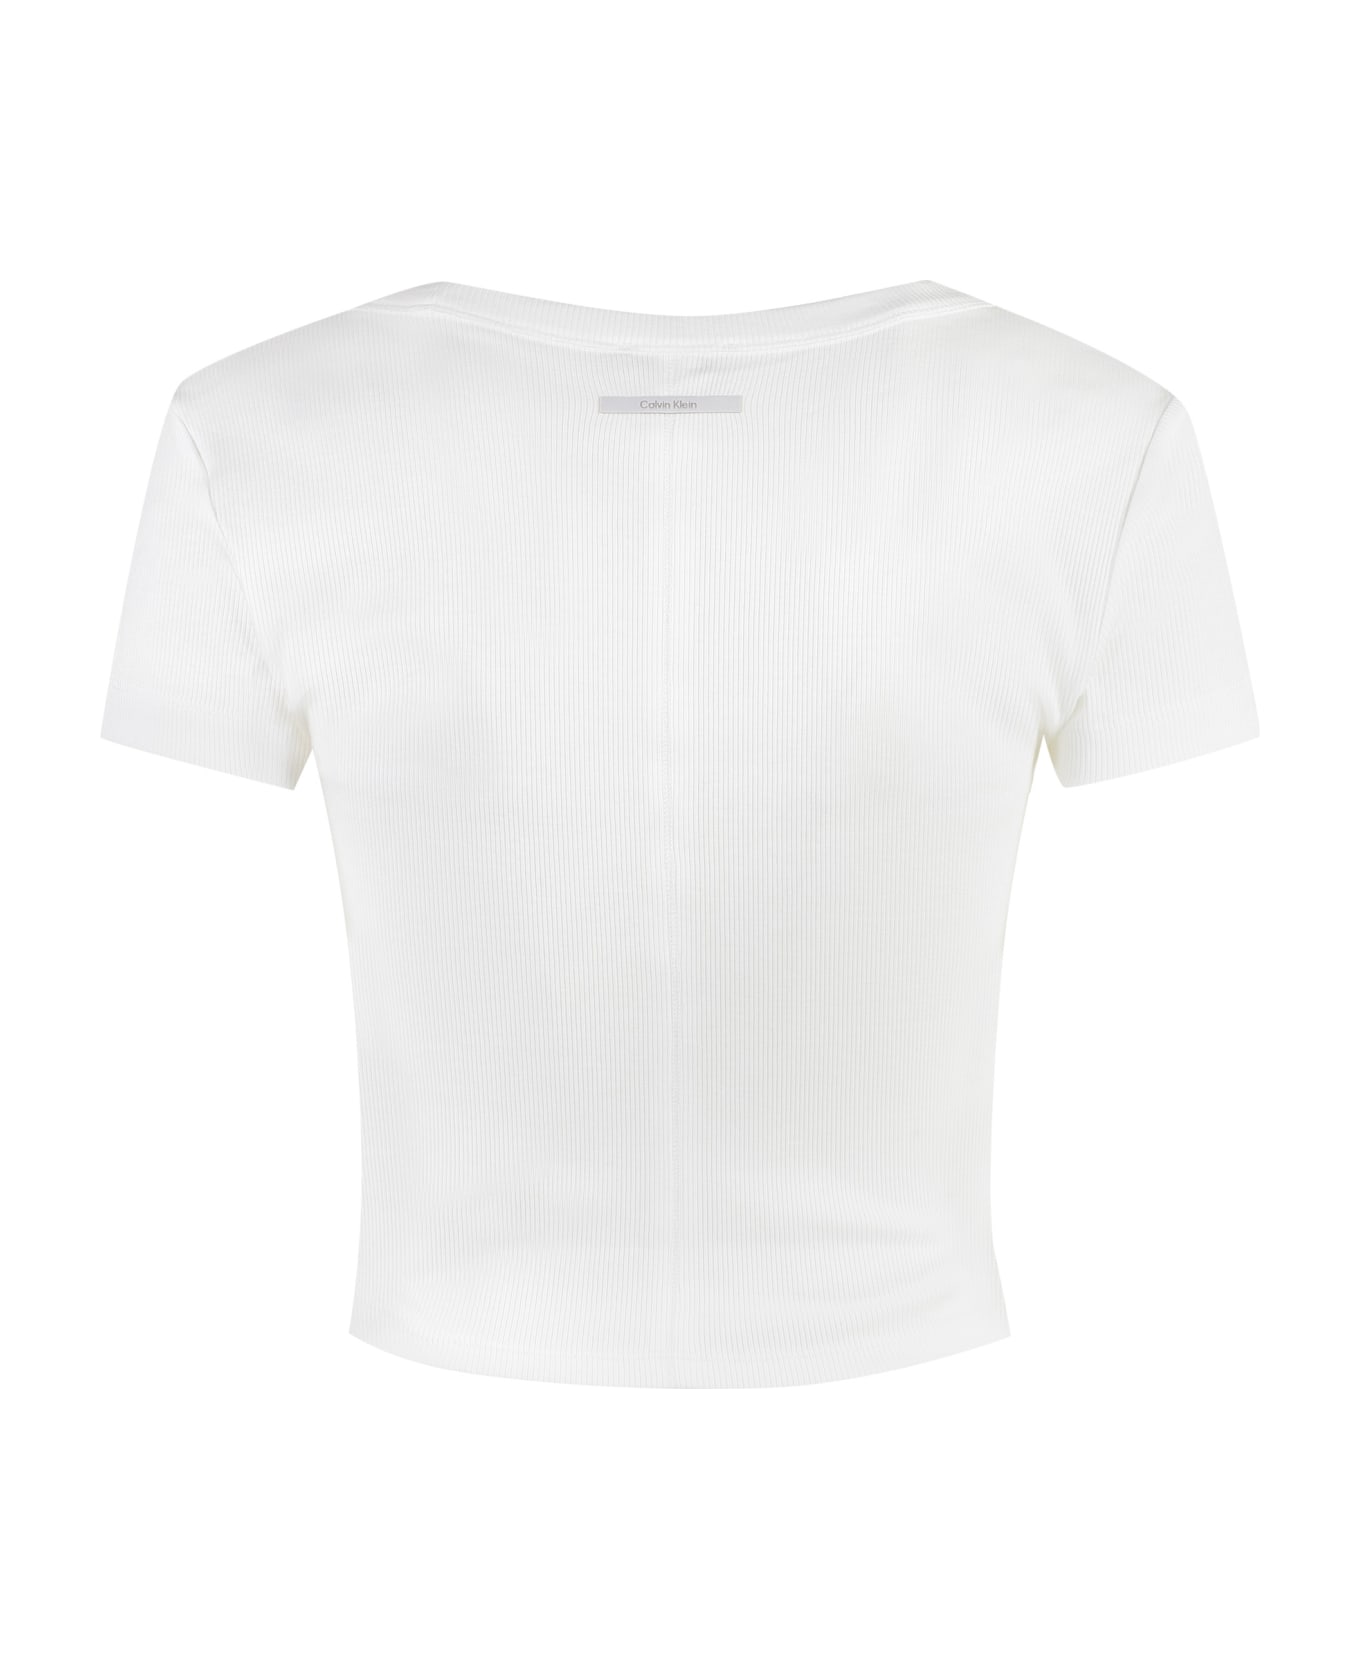 Calvin Klein Cotton Top - White